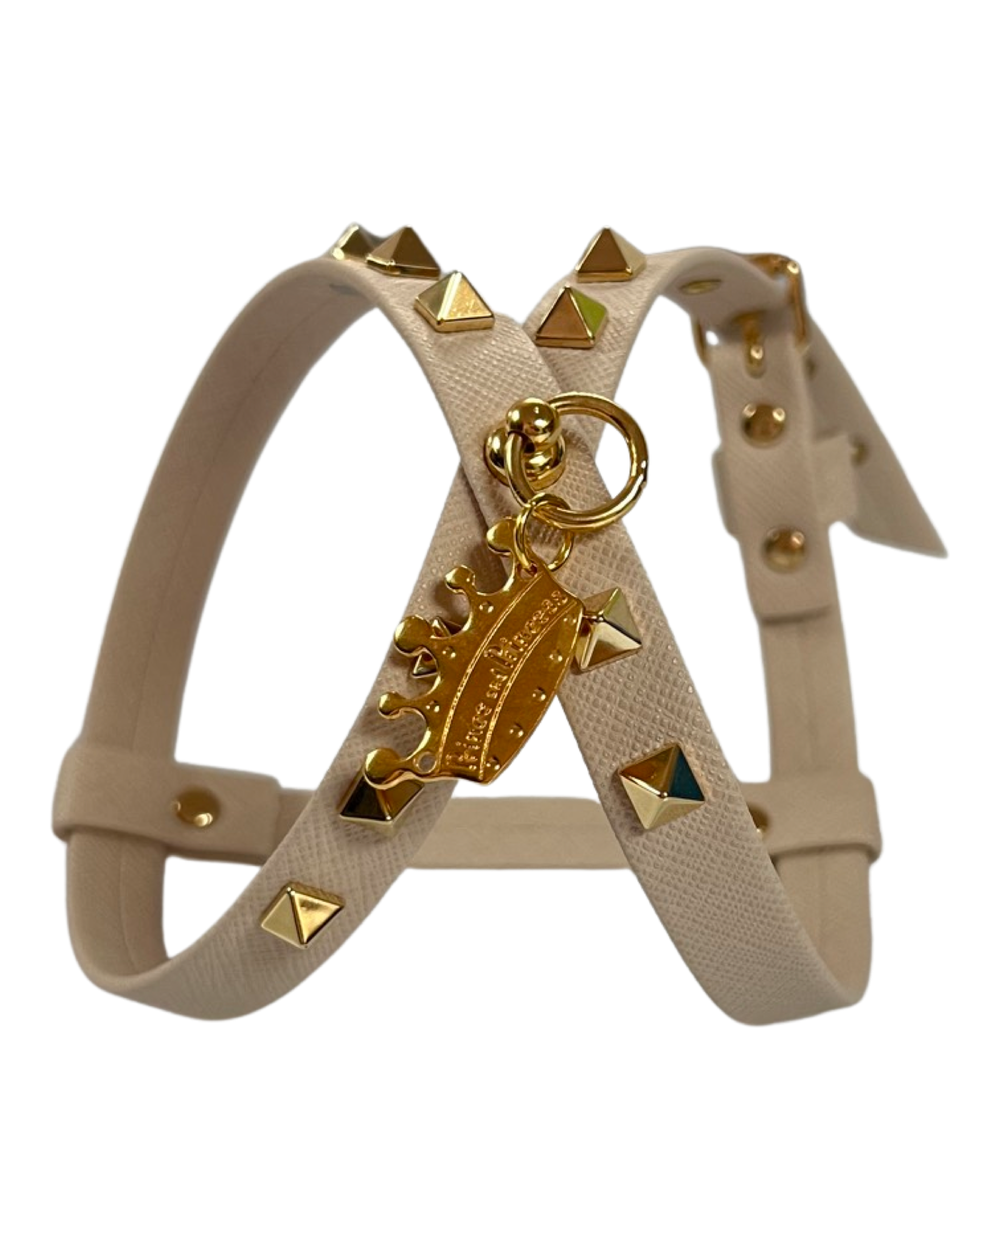 Fashion Dog Harness and Chain Leash Set - Sand with Gold Studs